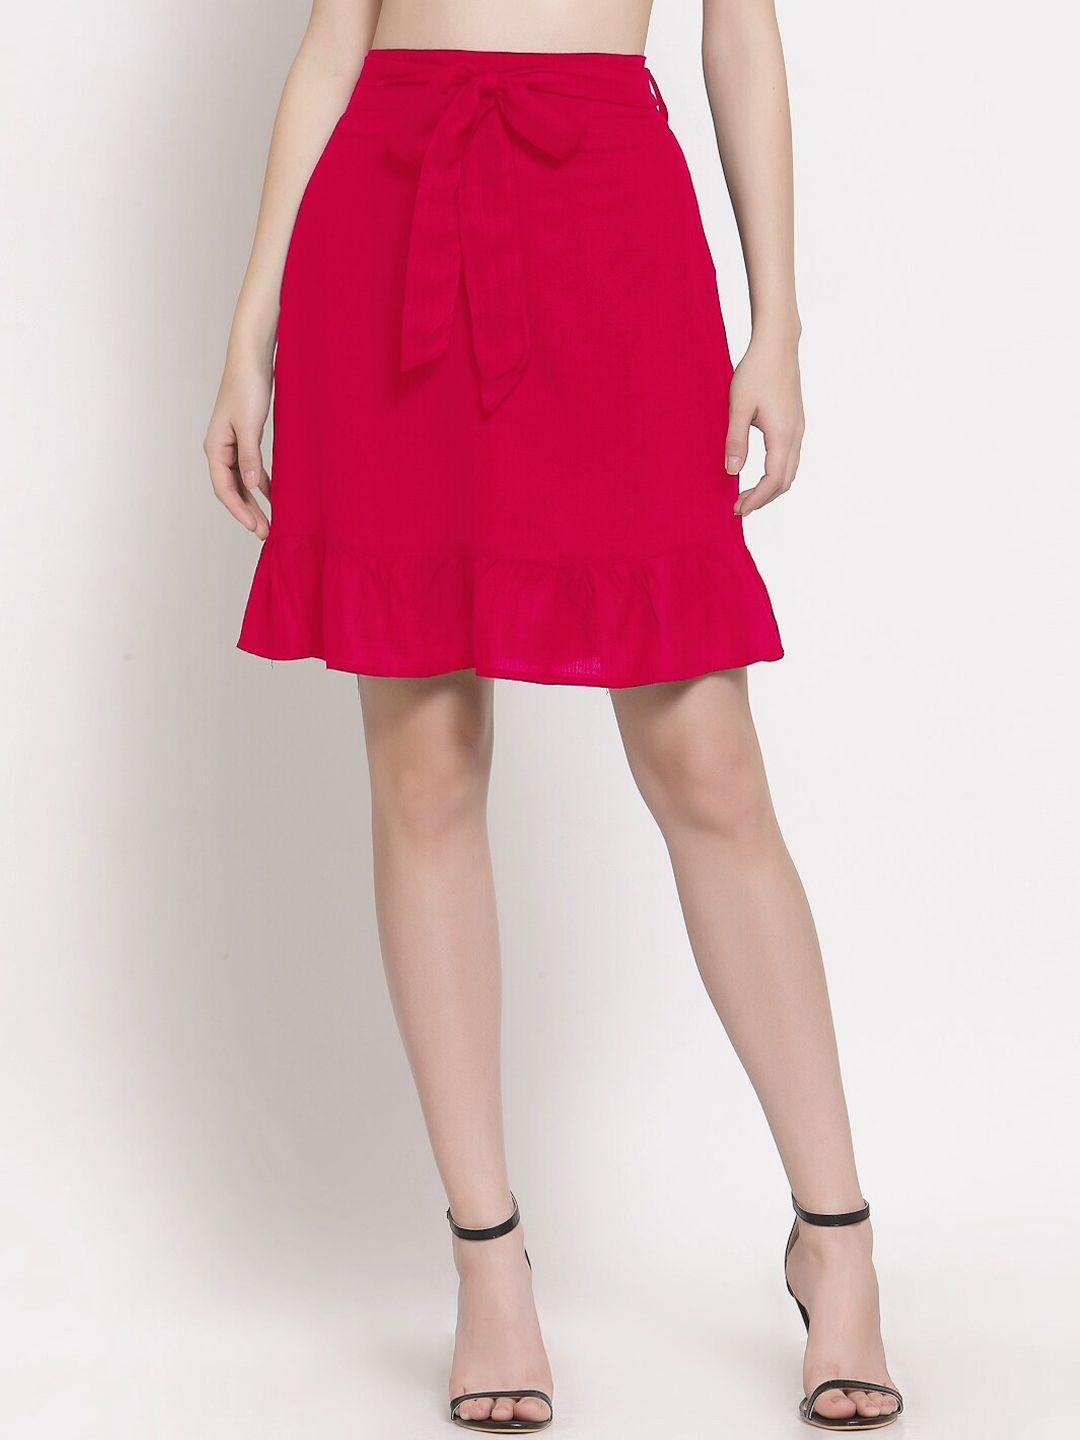 patrorna women fuchsia pink solid frilled straight skirt